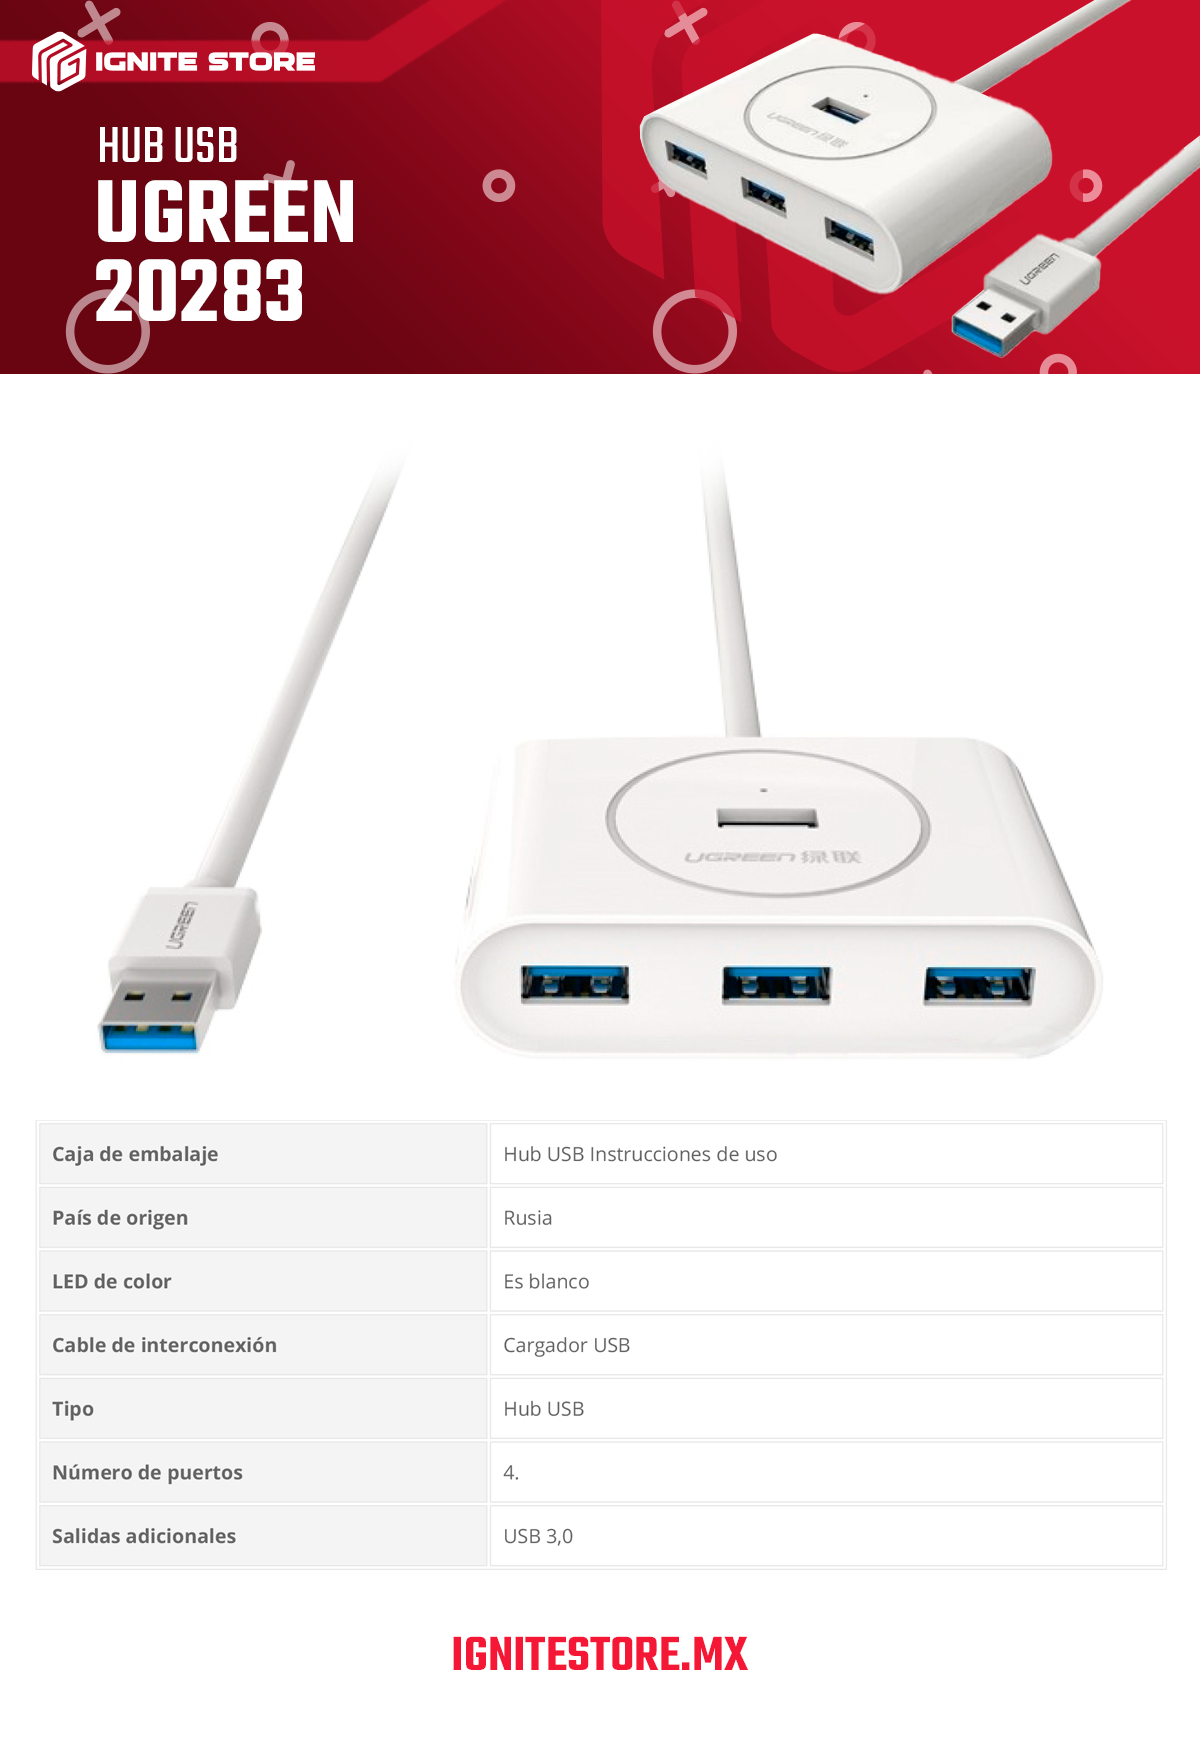 HUB USB UGREEN USB 3.0 4 PORTS WHITE 1M - 20283